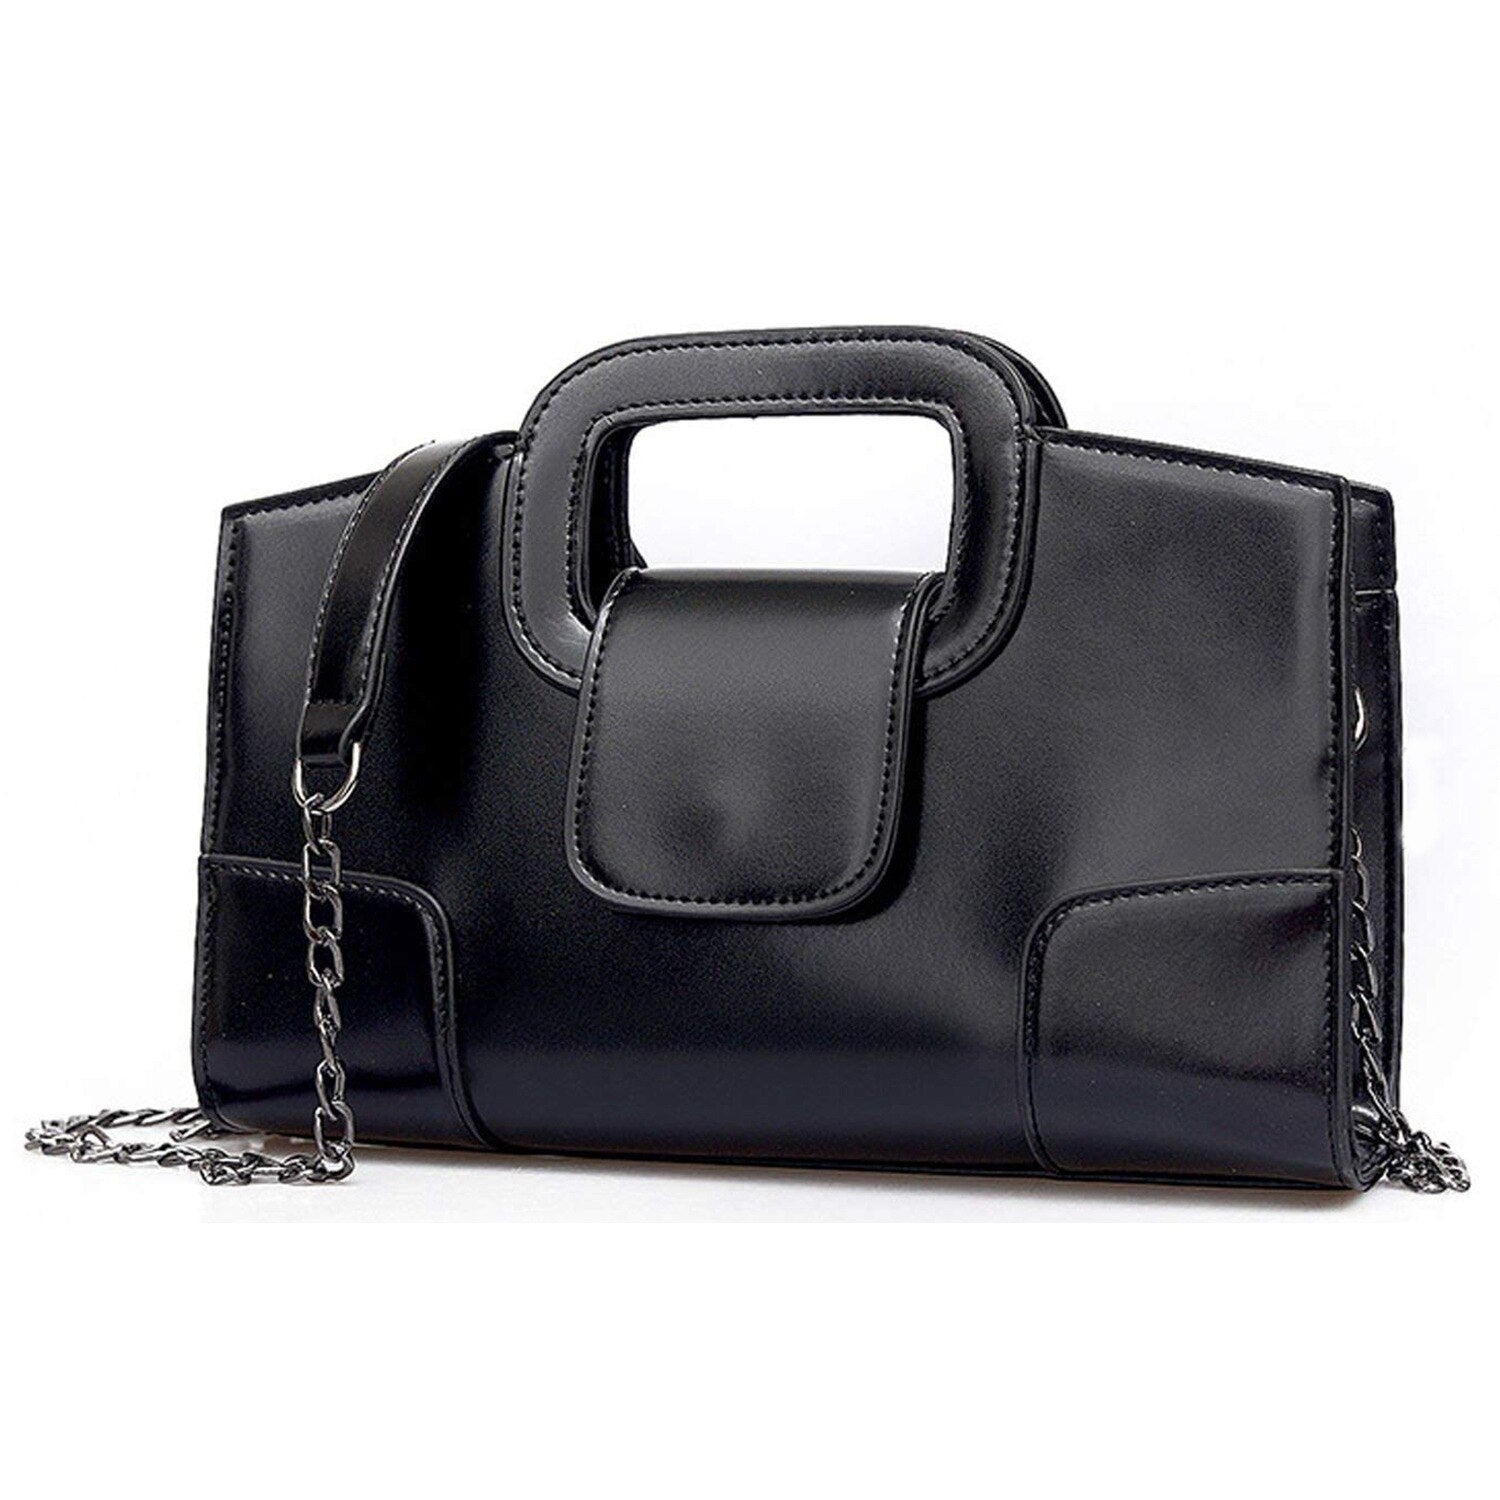 Leather Evening Handbags/Clutches Bags Crossbody Purse For Women - ebowsos